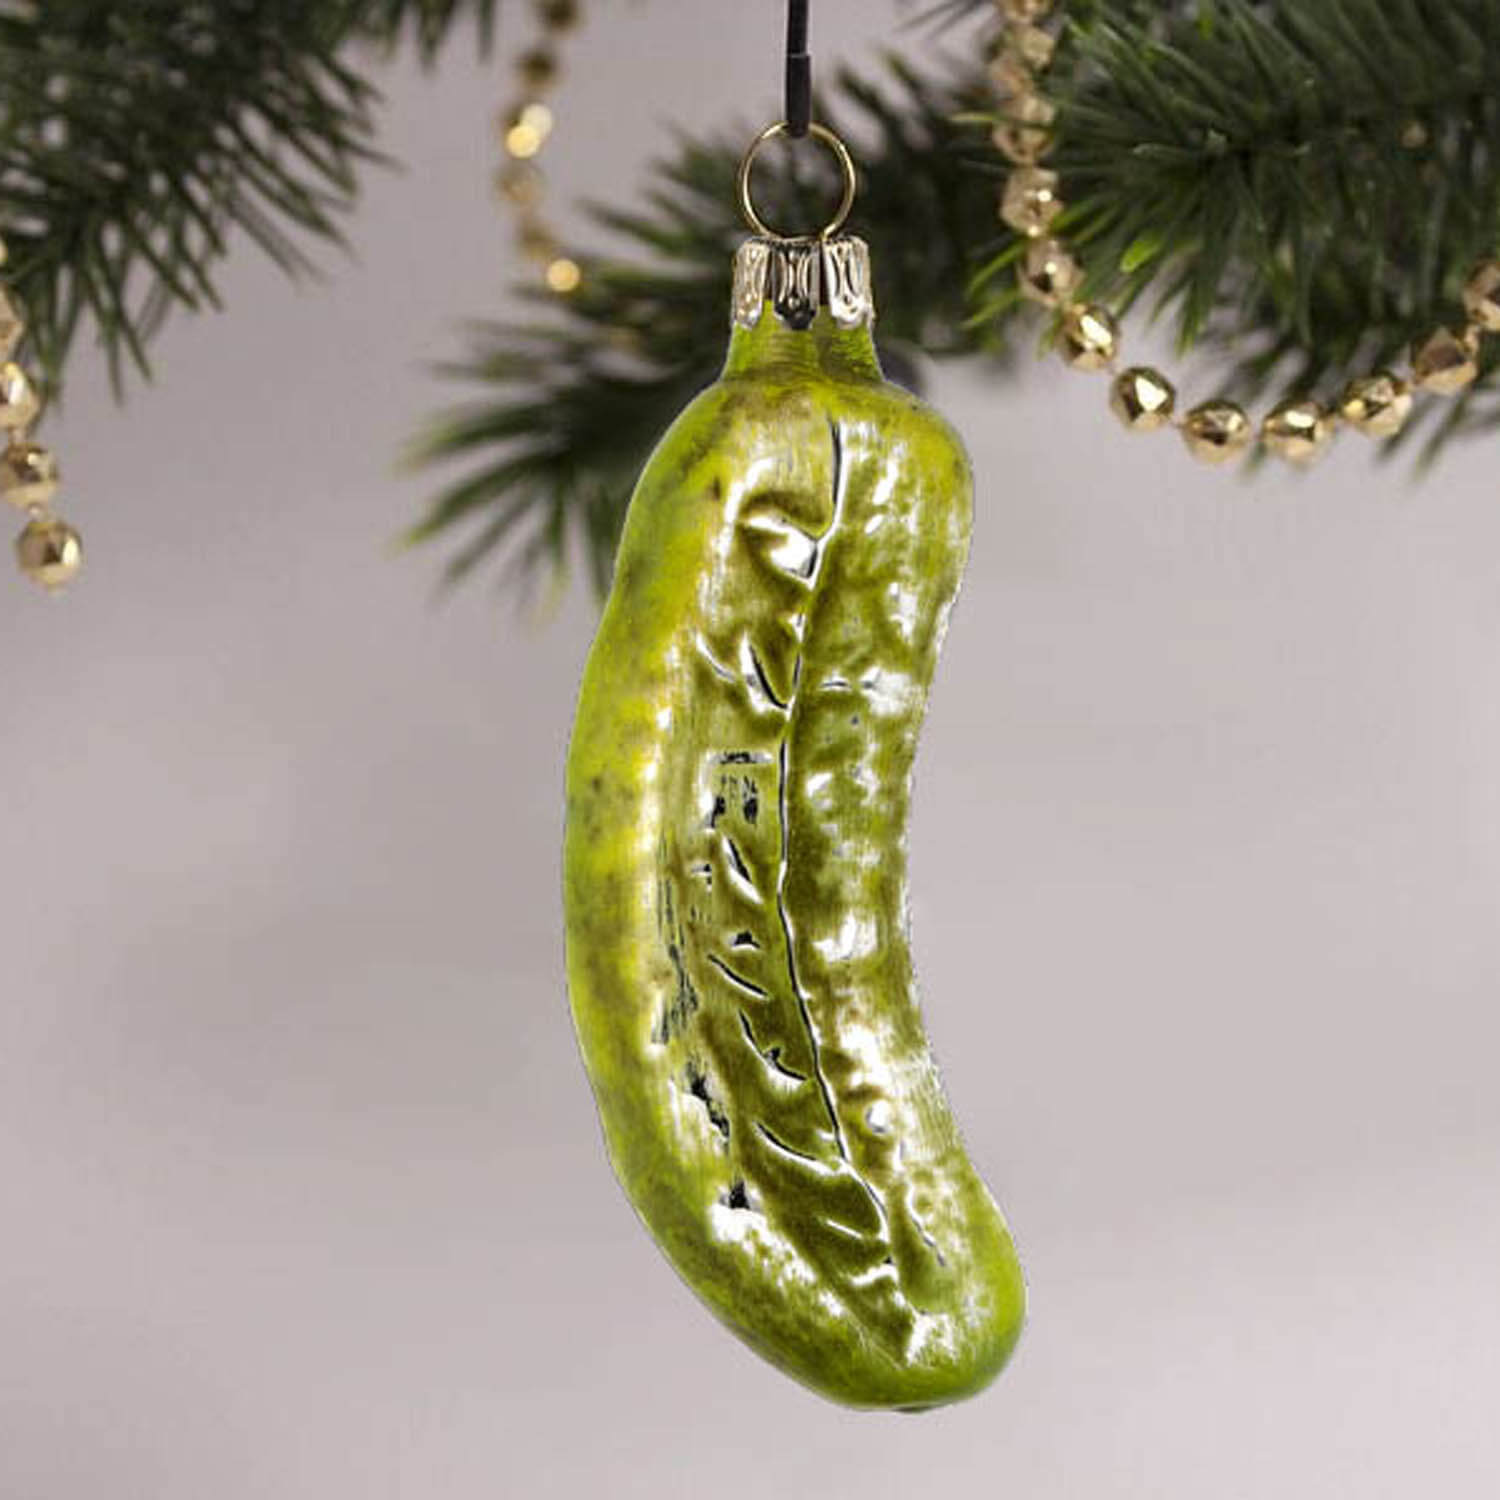 MAROLIN® - Glass ornament "Medium size pickle"